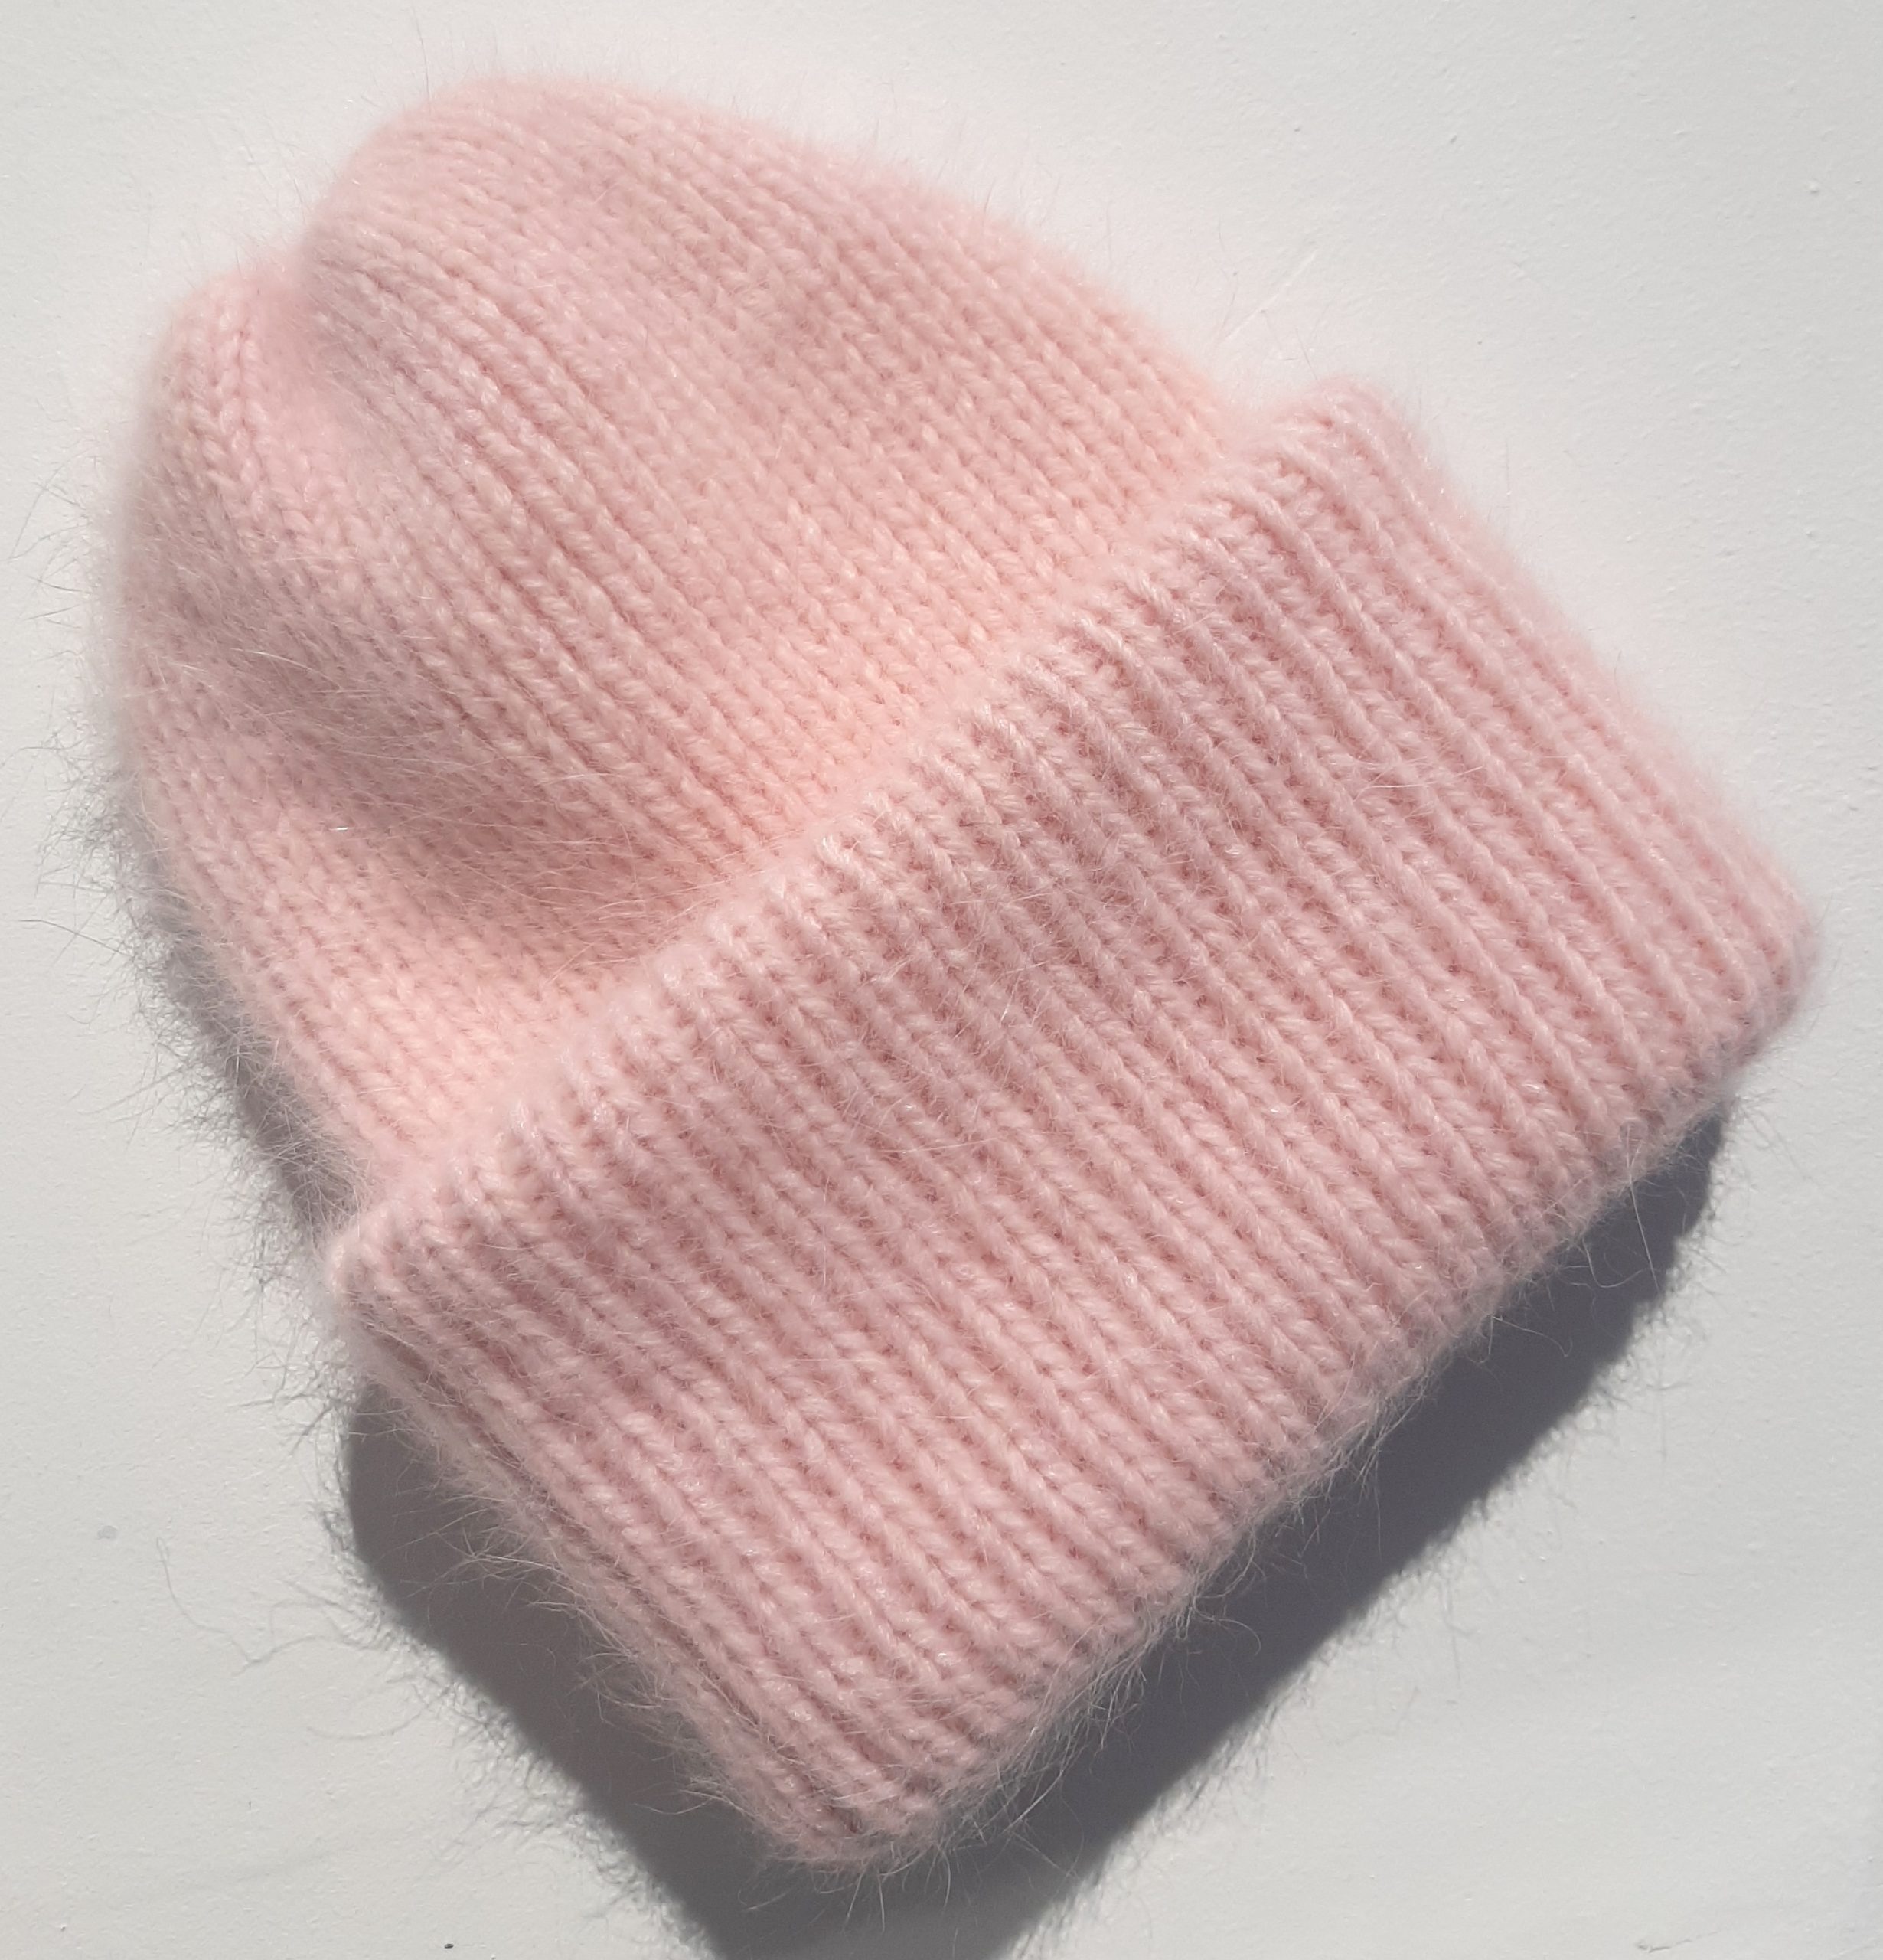 Pale pink angora hat 2 scaled